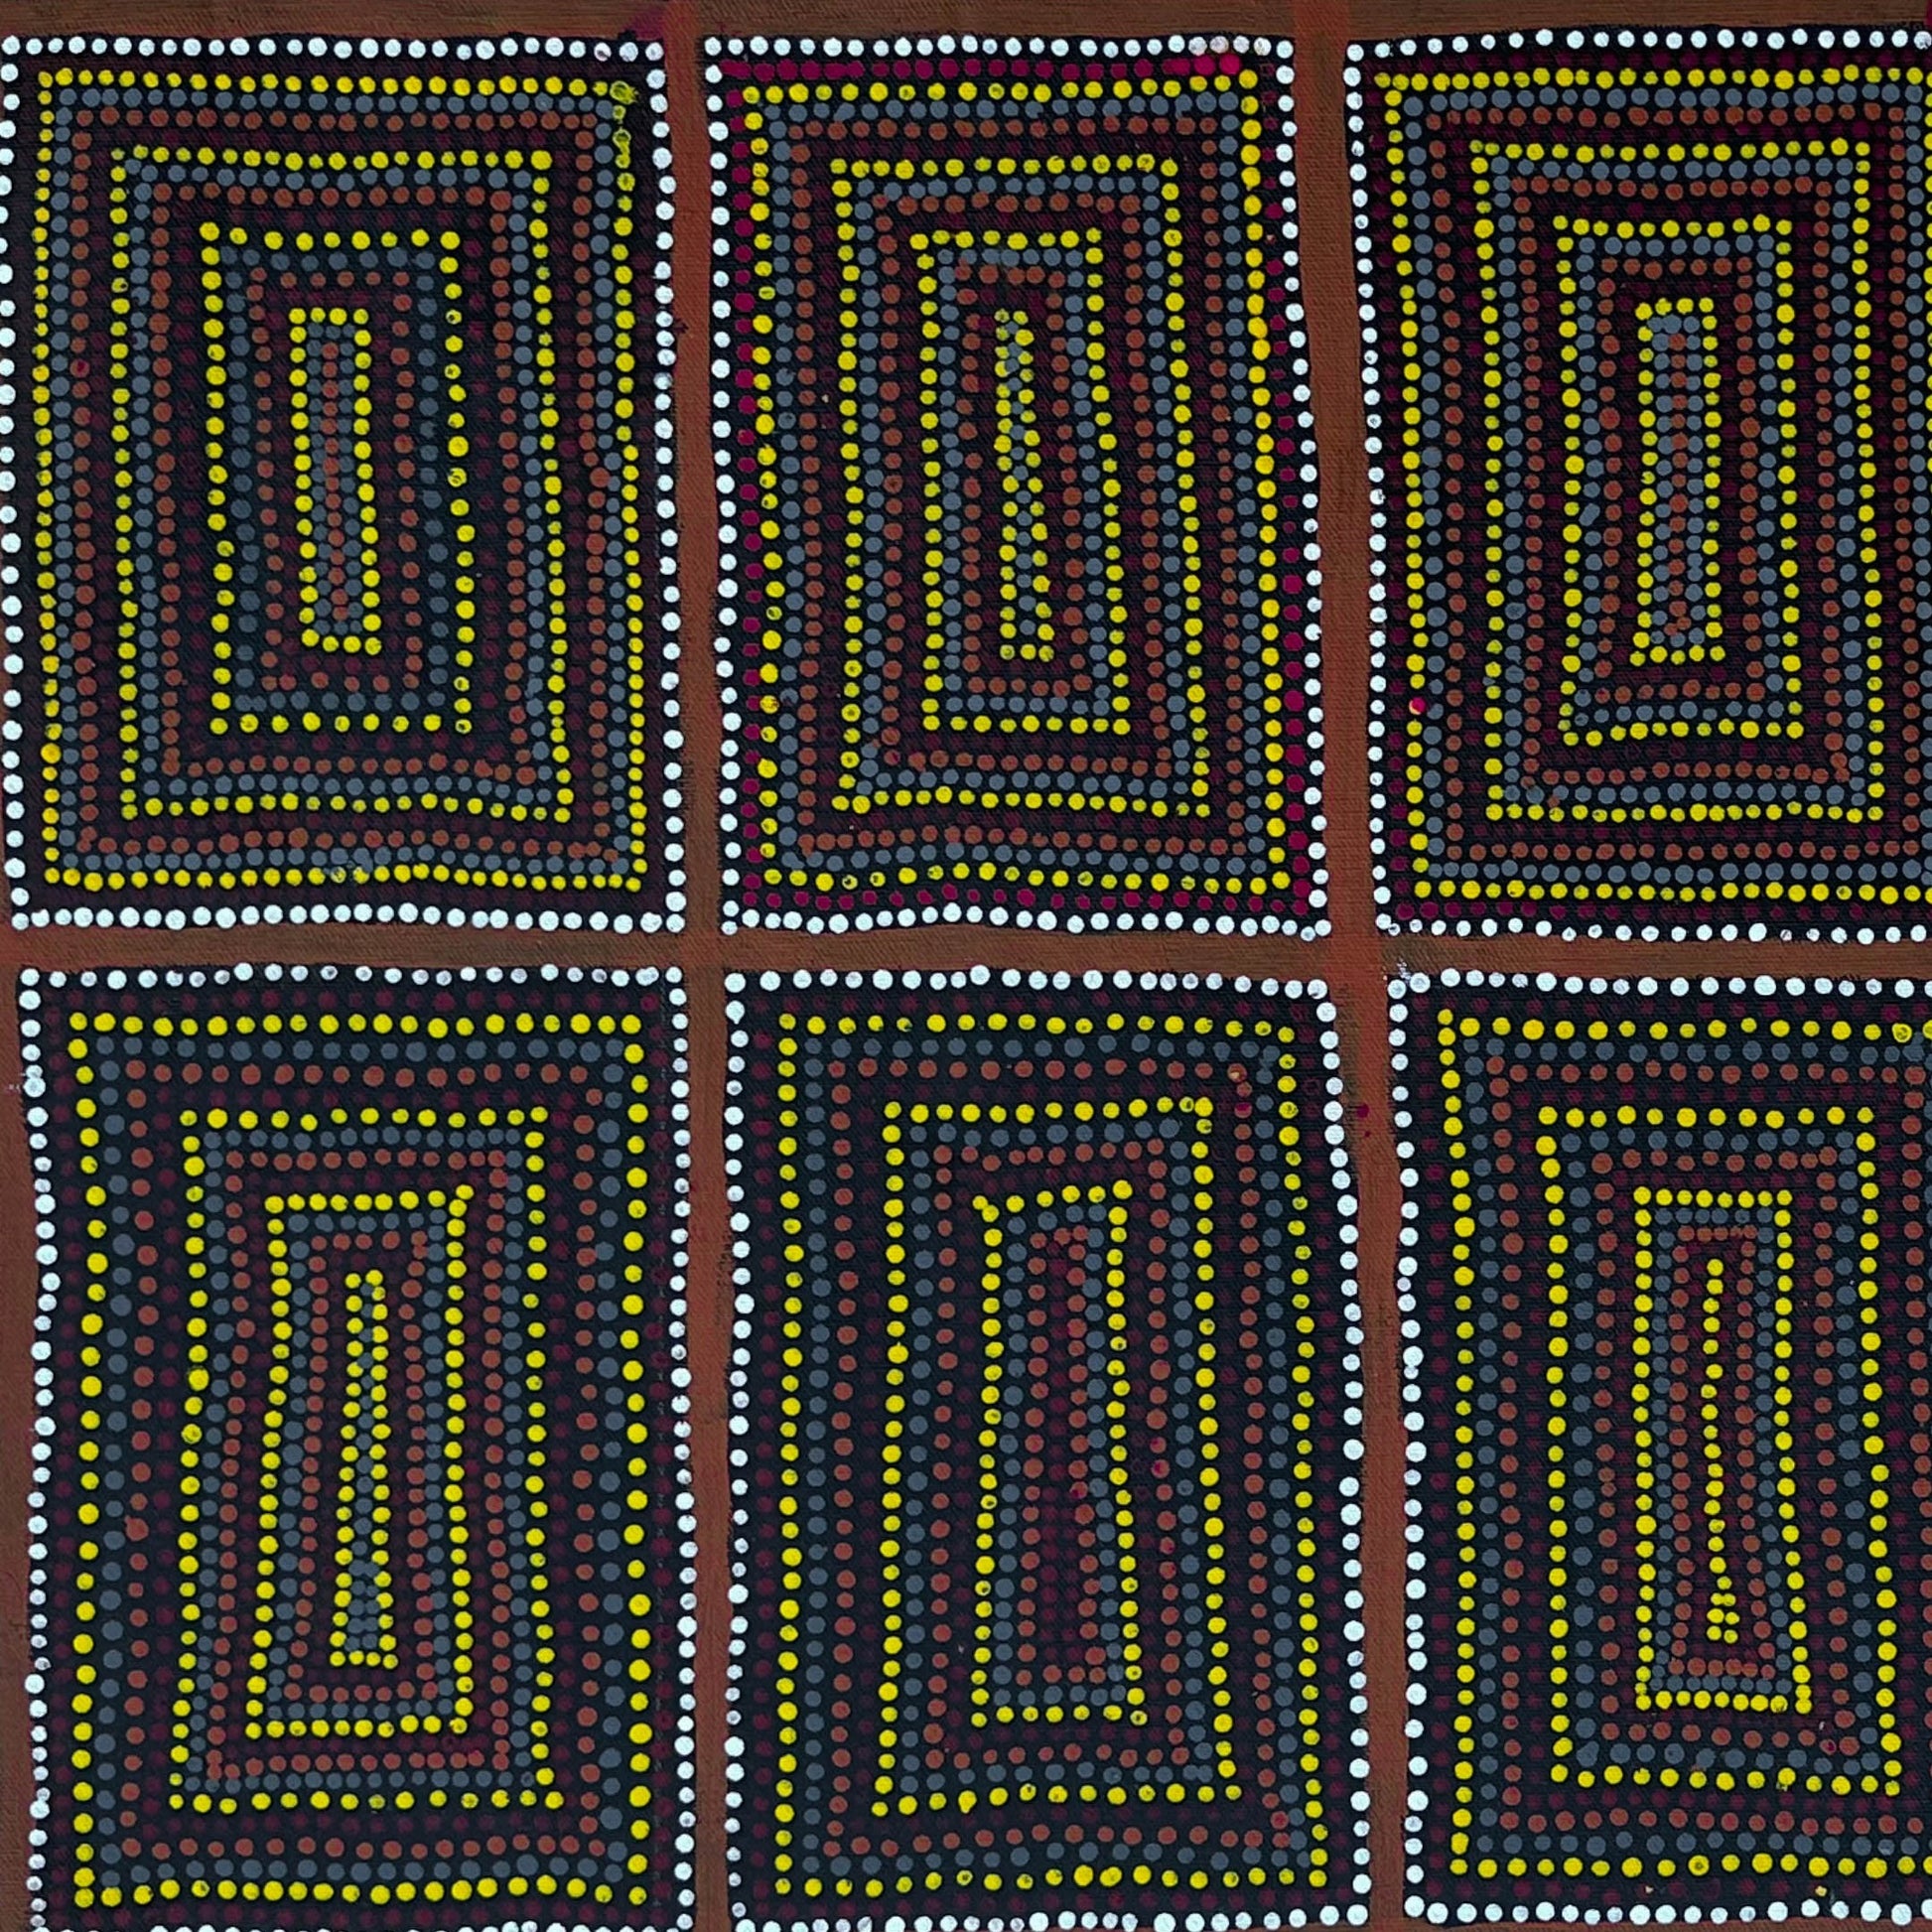 Margaret Price Penangke Utopia Indigenous Art Aboriginal Art Australian Art Dot Art Painting Darwin Based Gallery Ochre Colours 